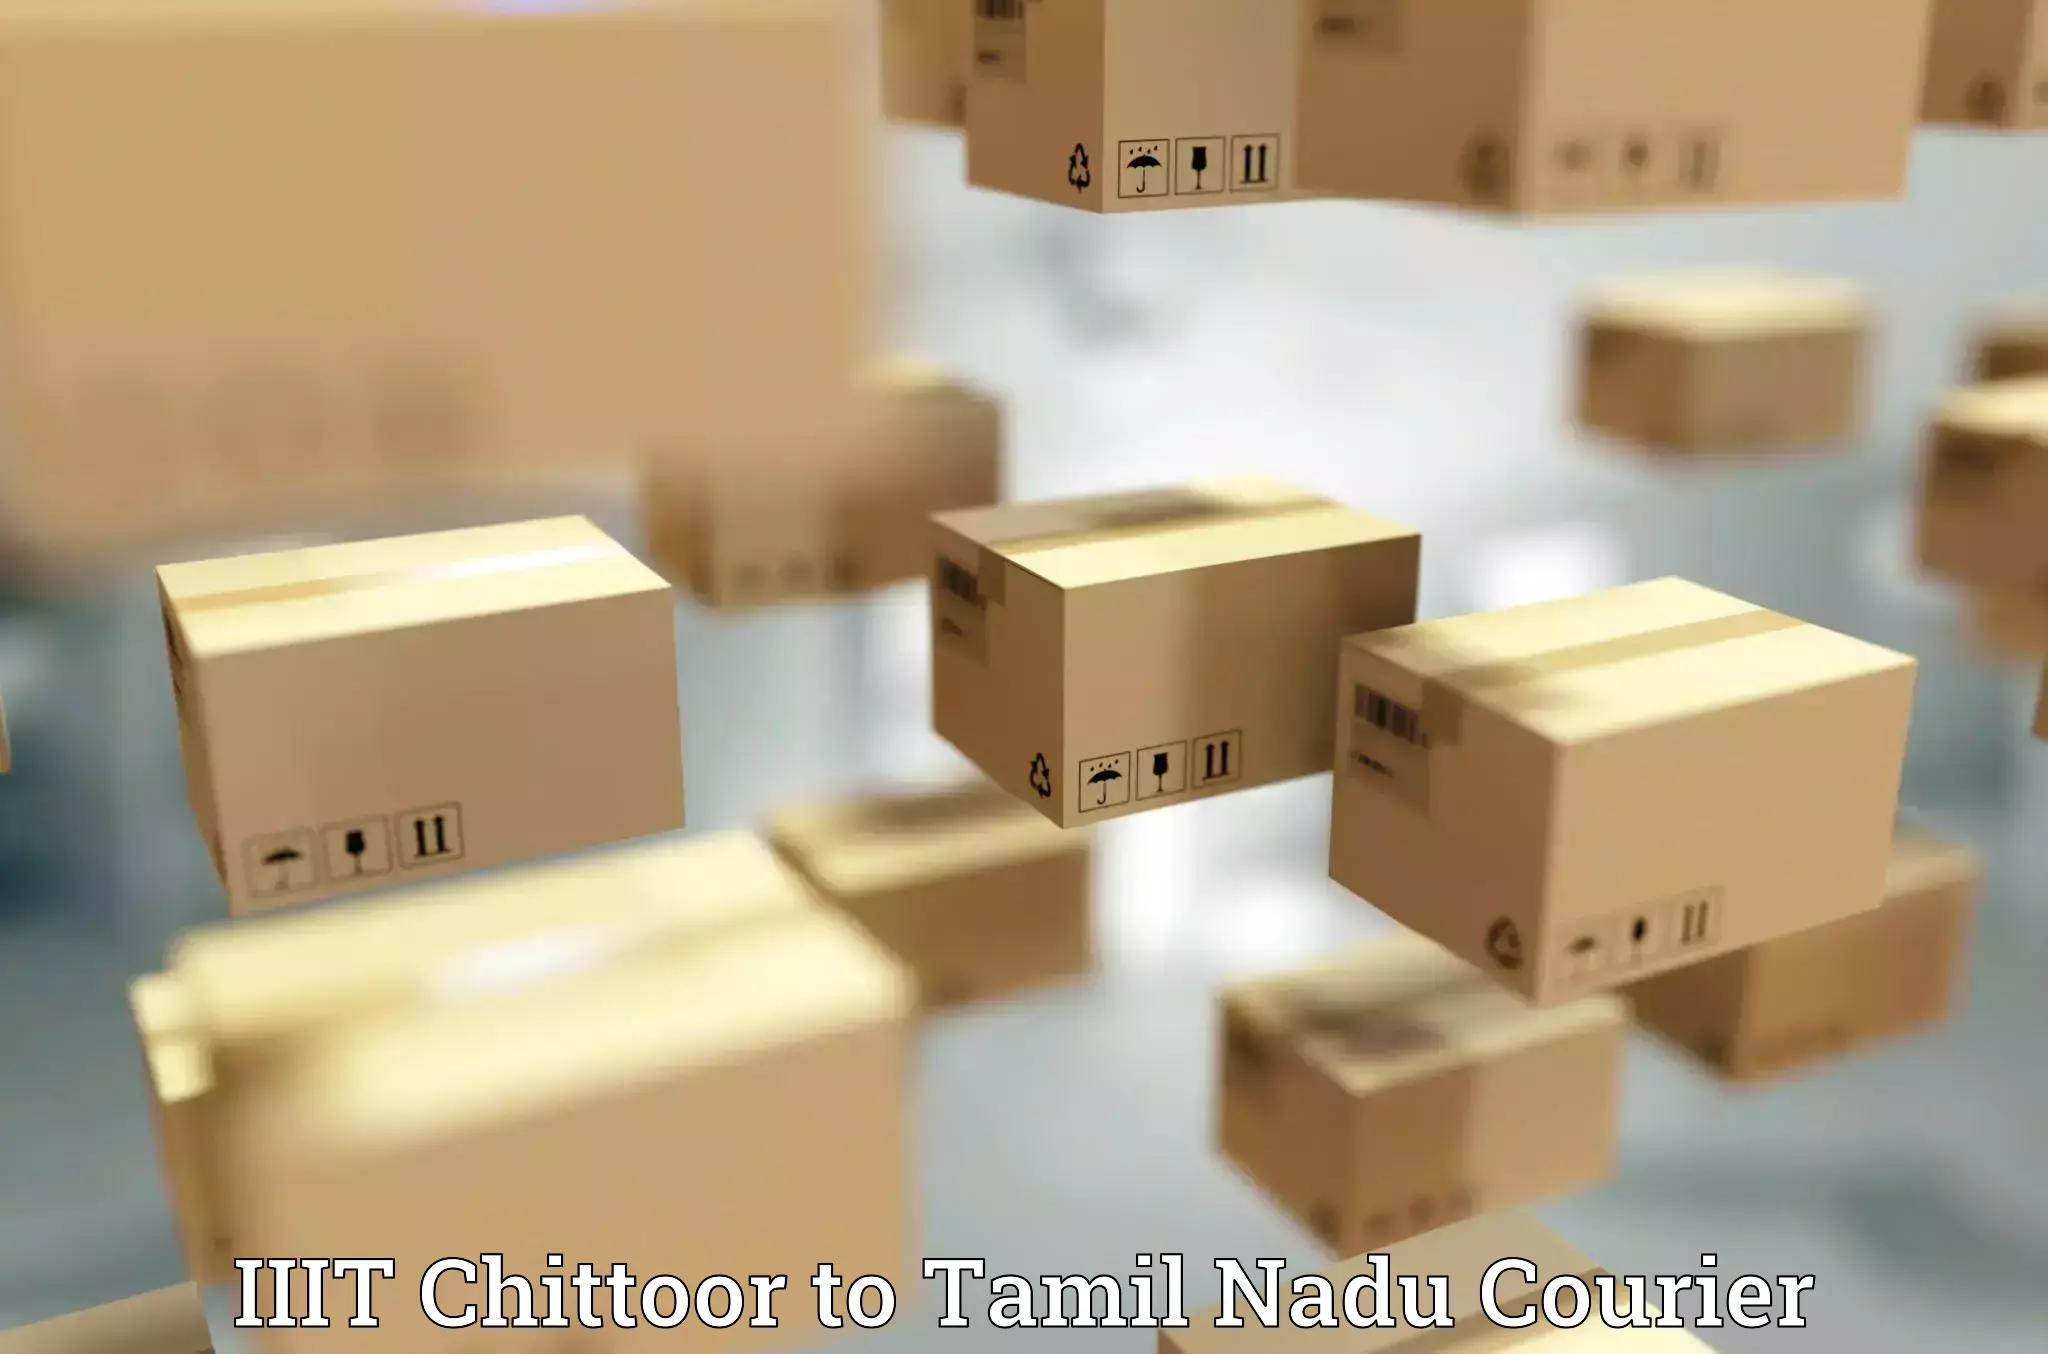 Courier service innovation IIIT Chittoor to Thiruvarur